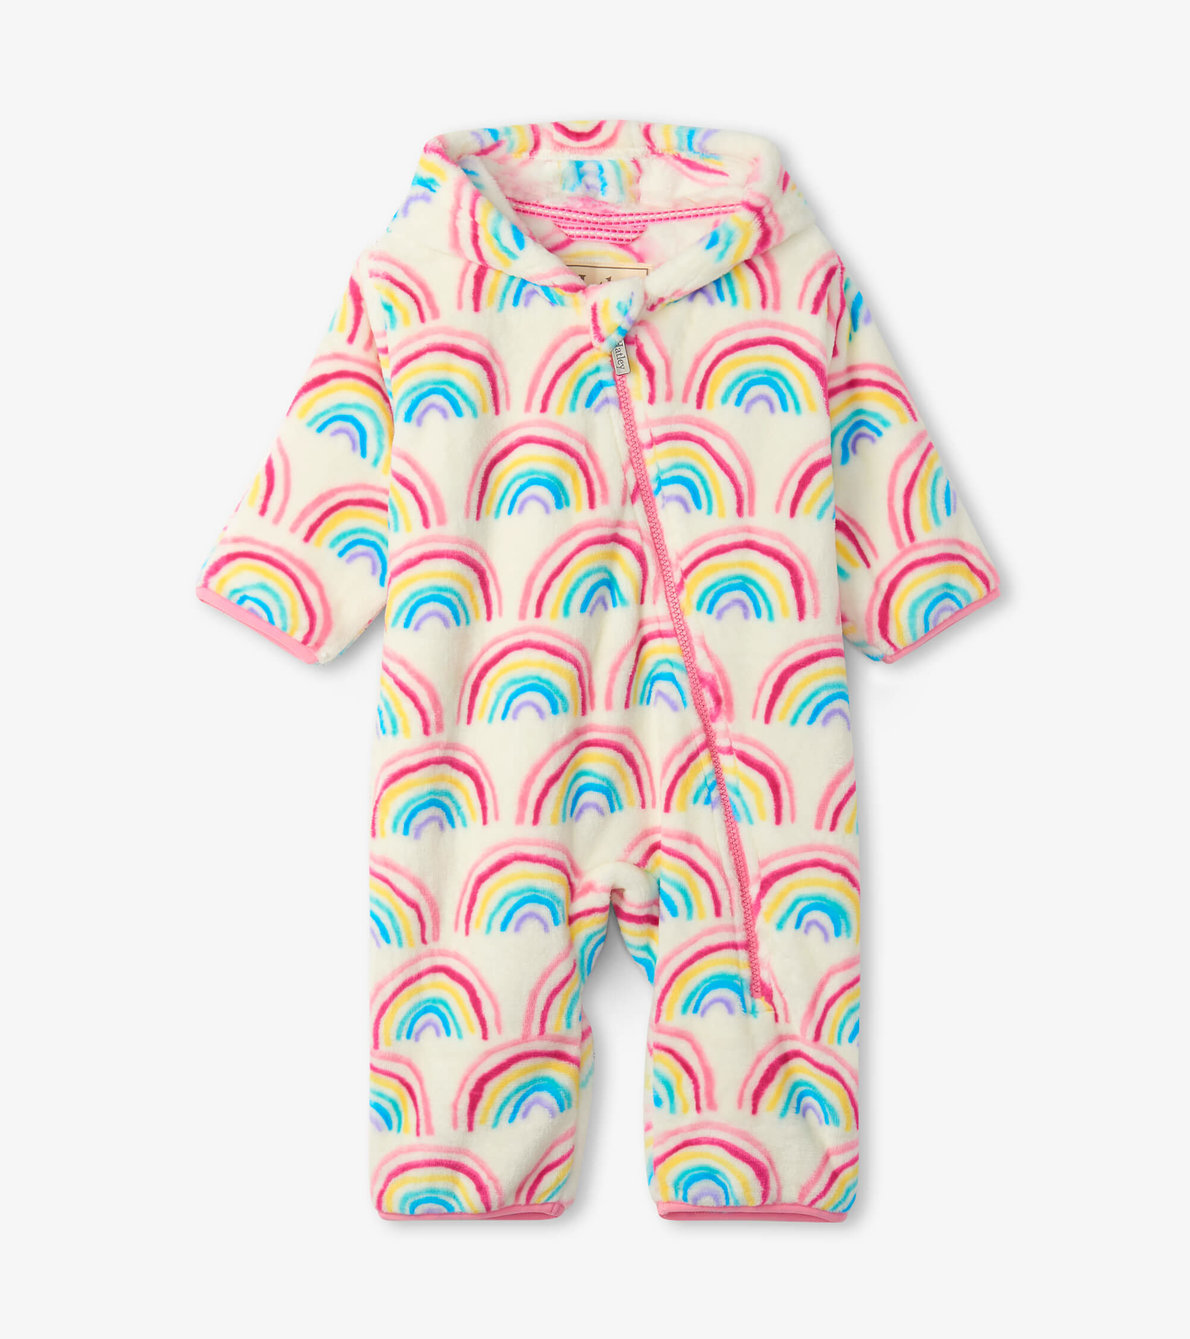 View larger image of Pretty Rainbows Fuzzy Fleece Baby Bundler